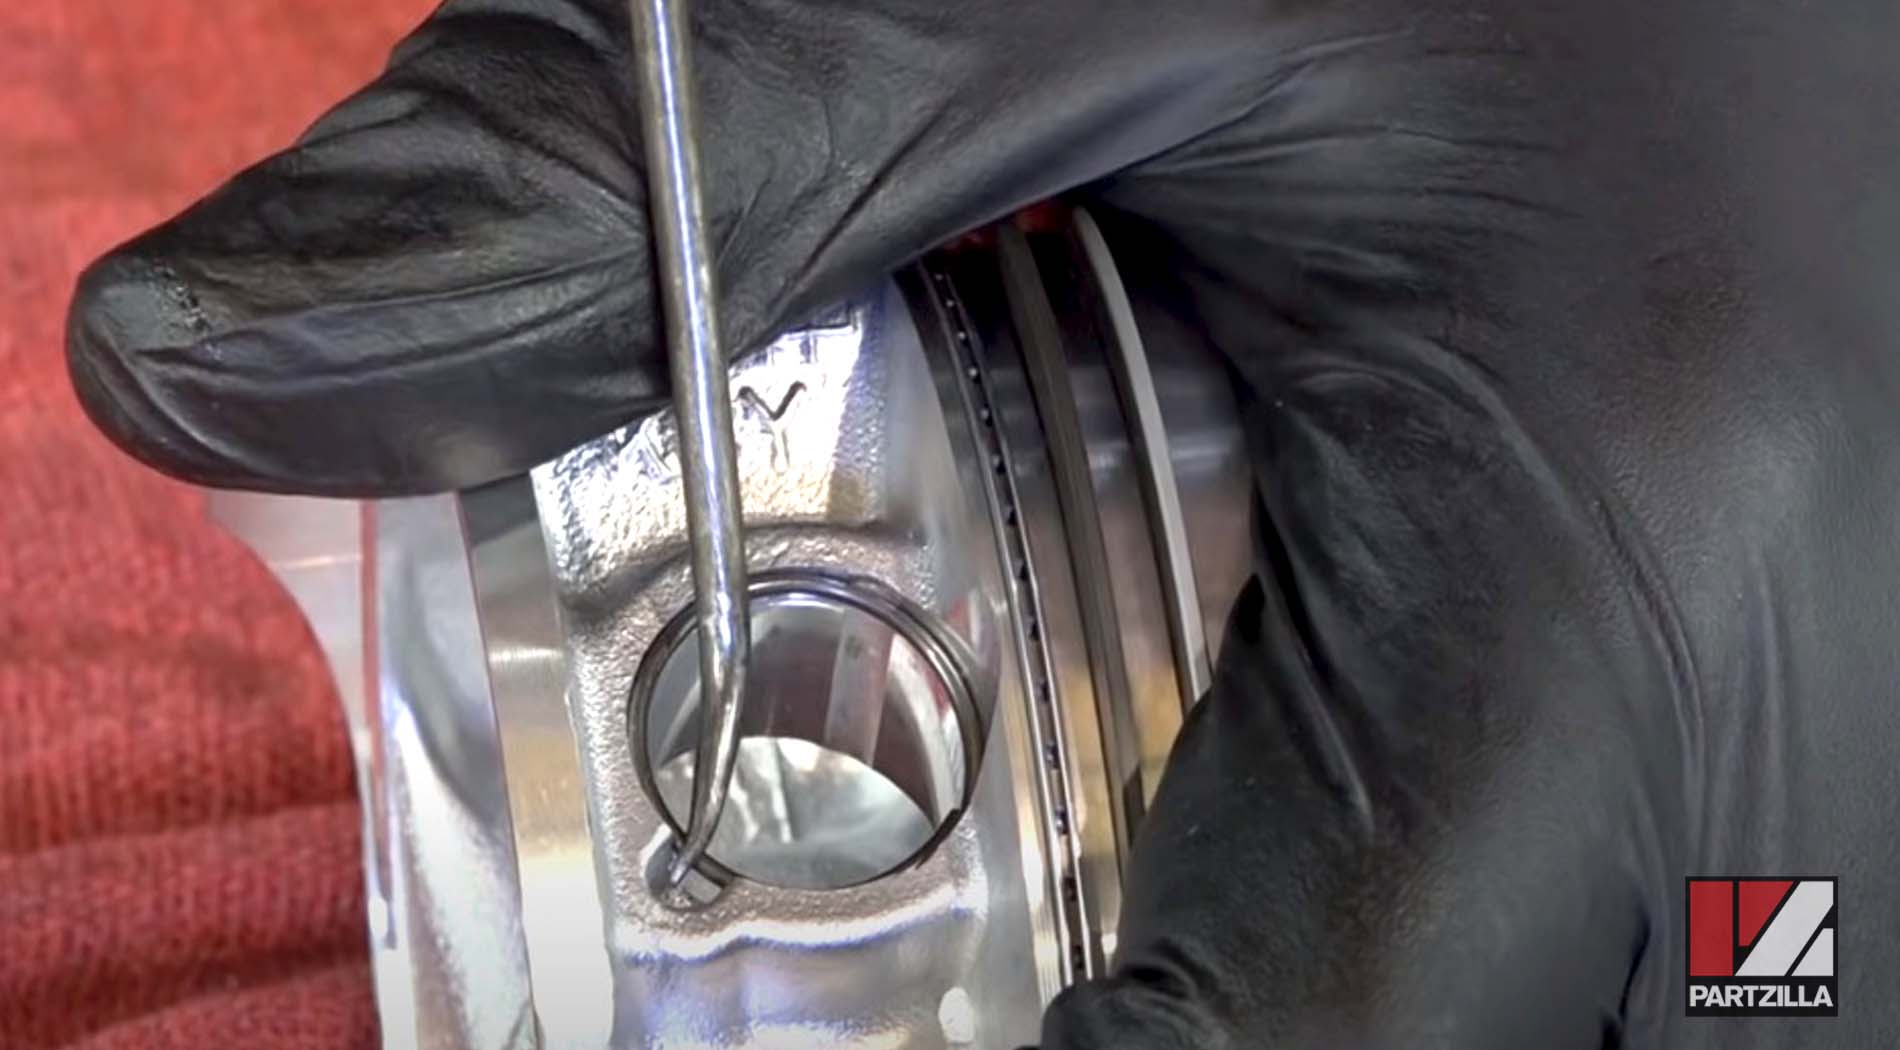 Honda TRX400 engine rebuild new piston snap ring